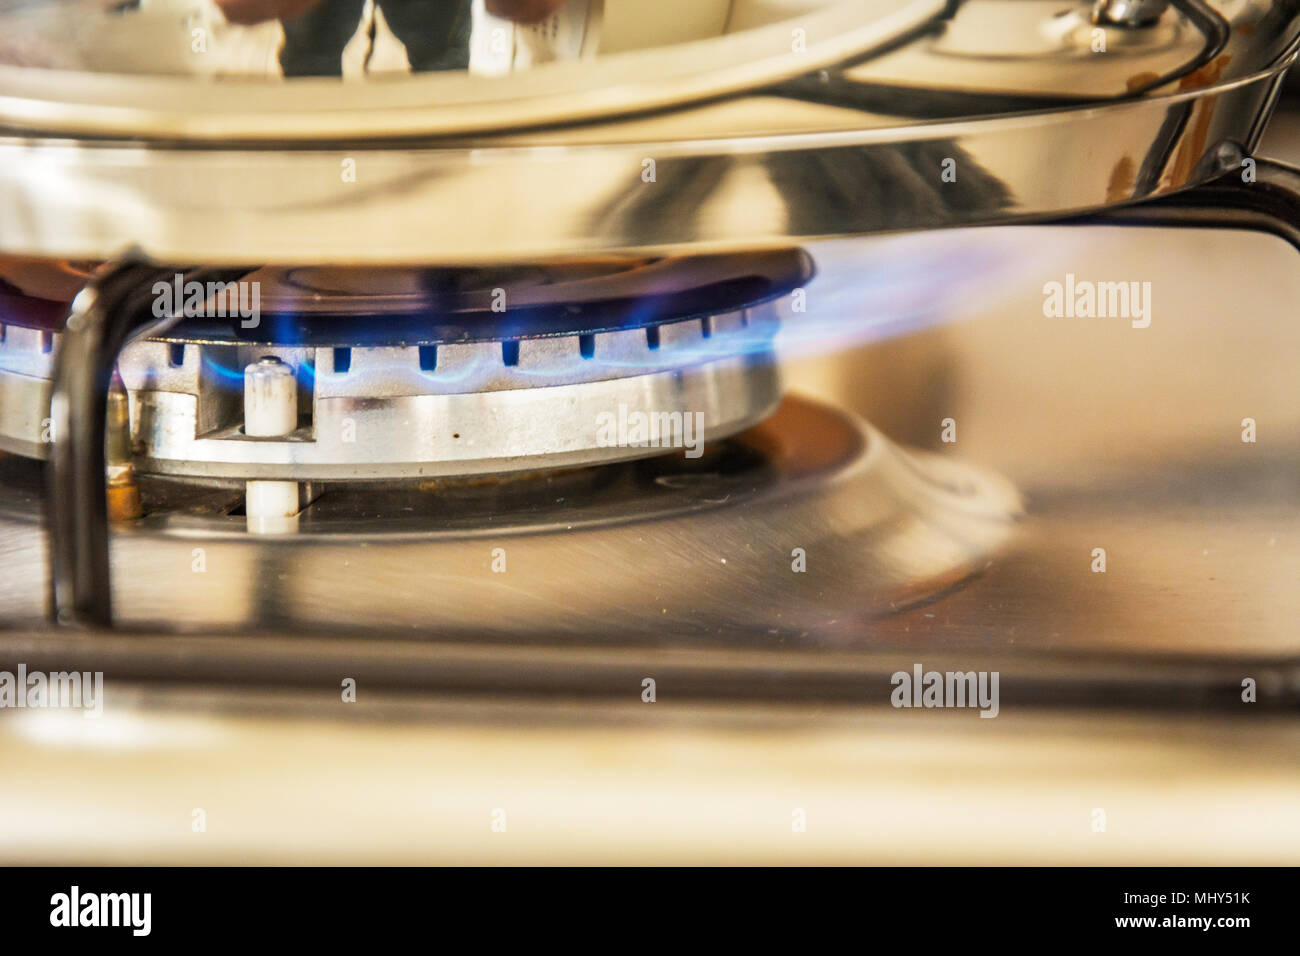 Estufa de gas propano fotografías e imágenes de alta resolución - Alamy